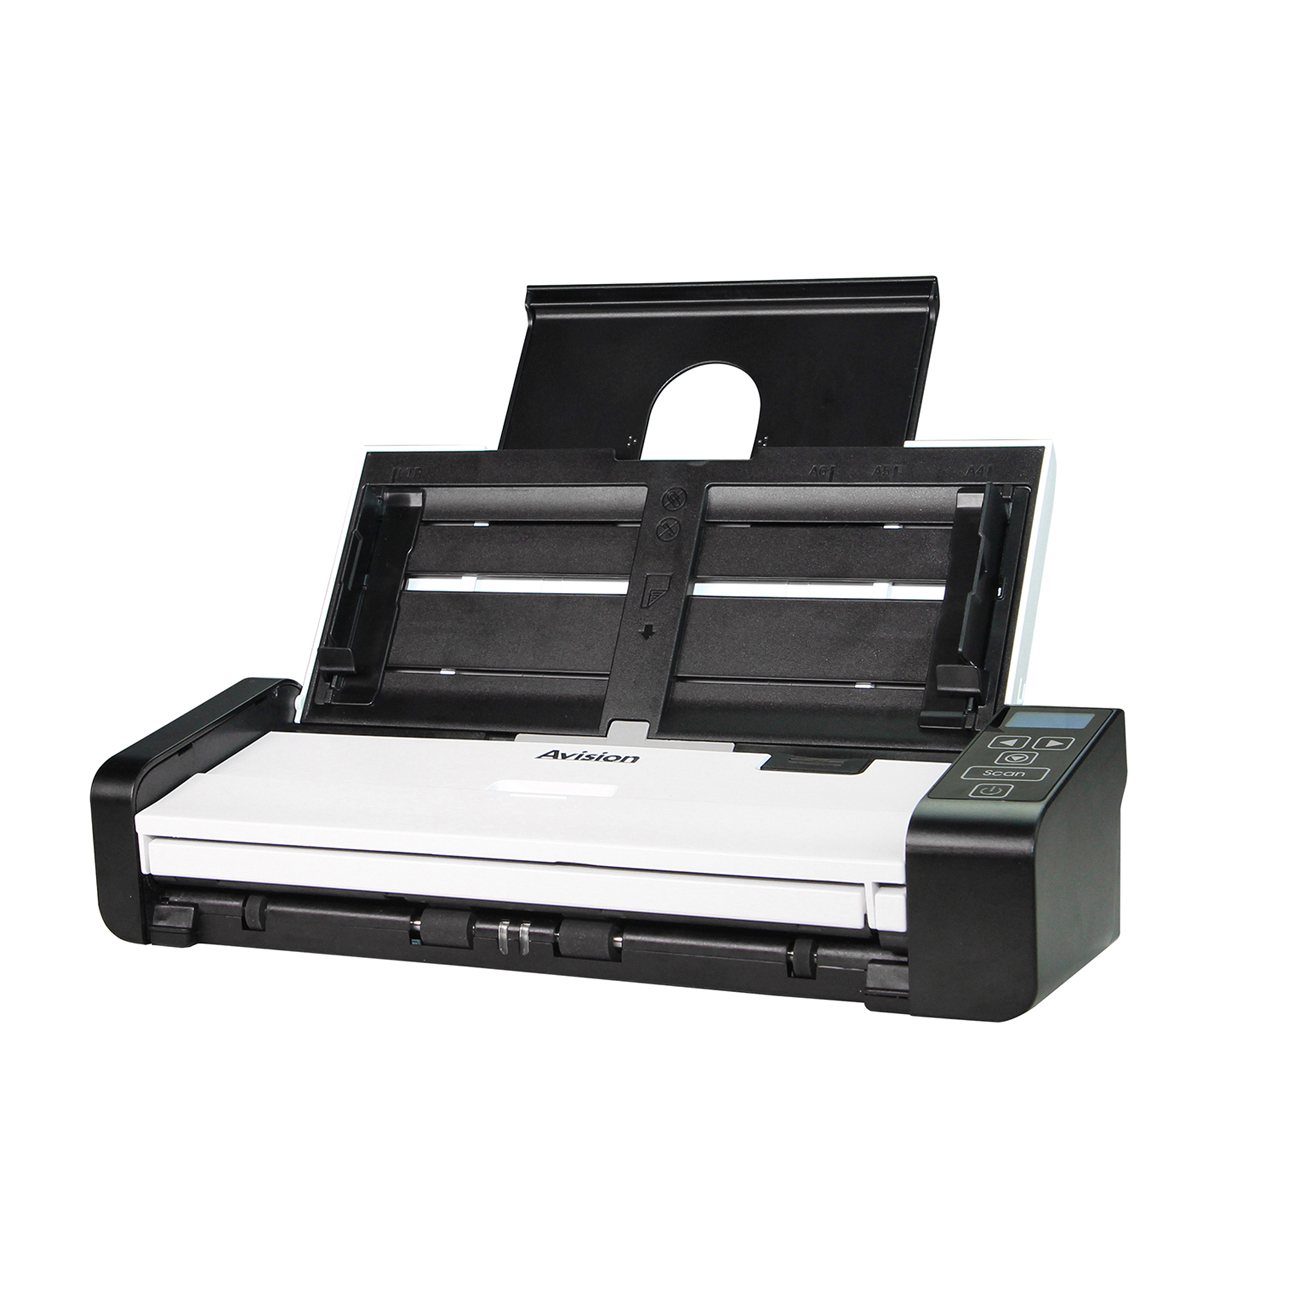 Avision Dokumentenscanner AD215L A4 Duplex - FL-1513B